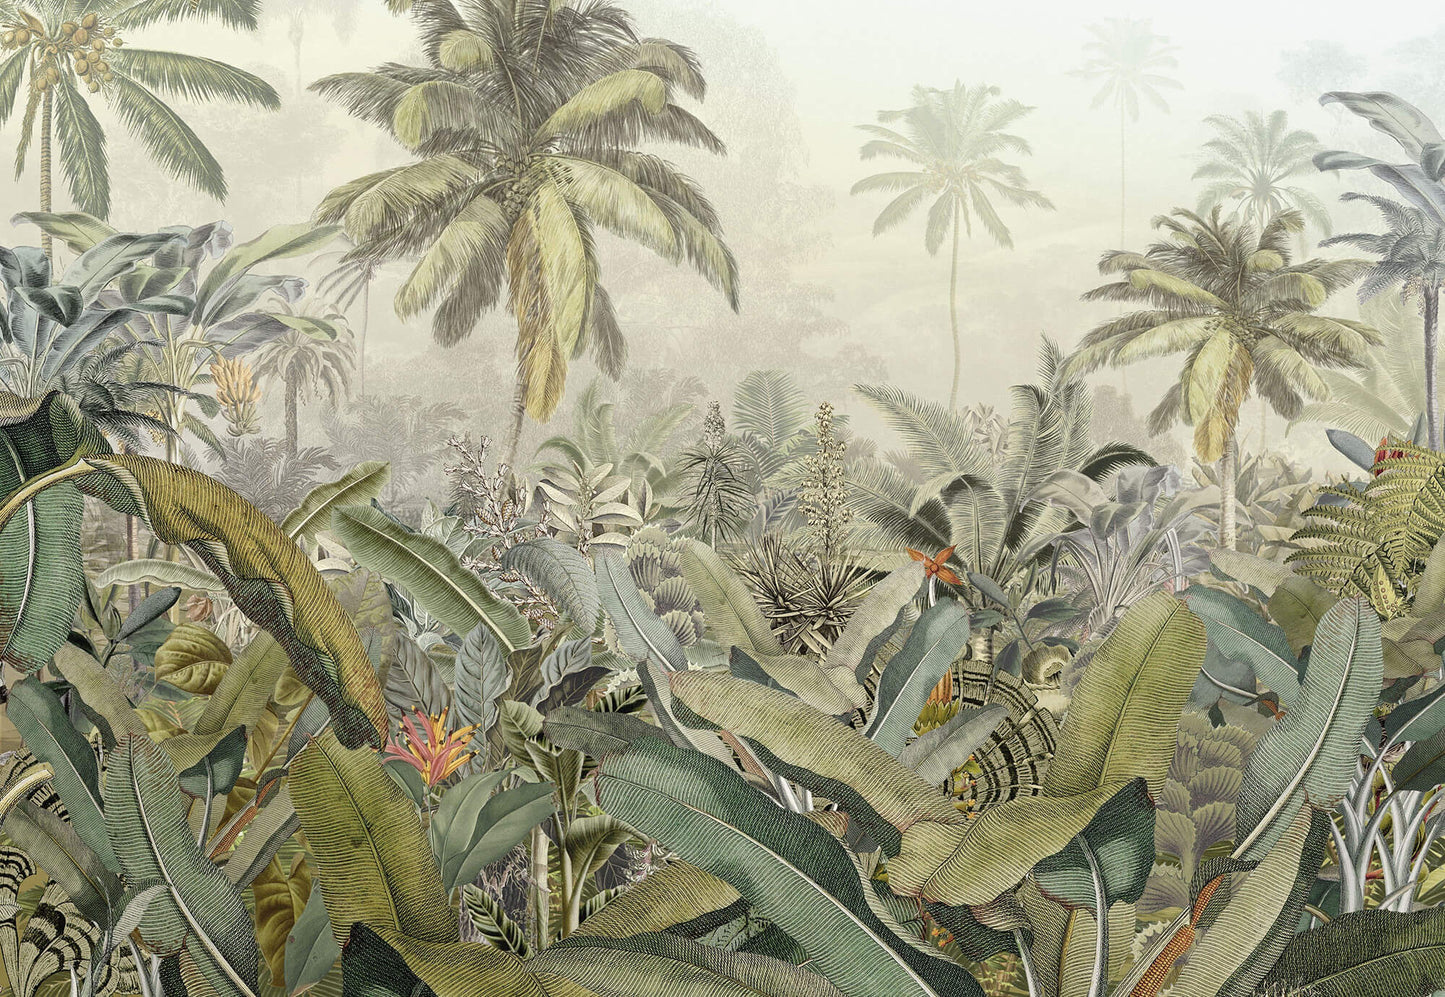 Caribbean Rainforest Mural Wallpaper (SqM)